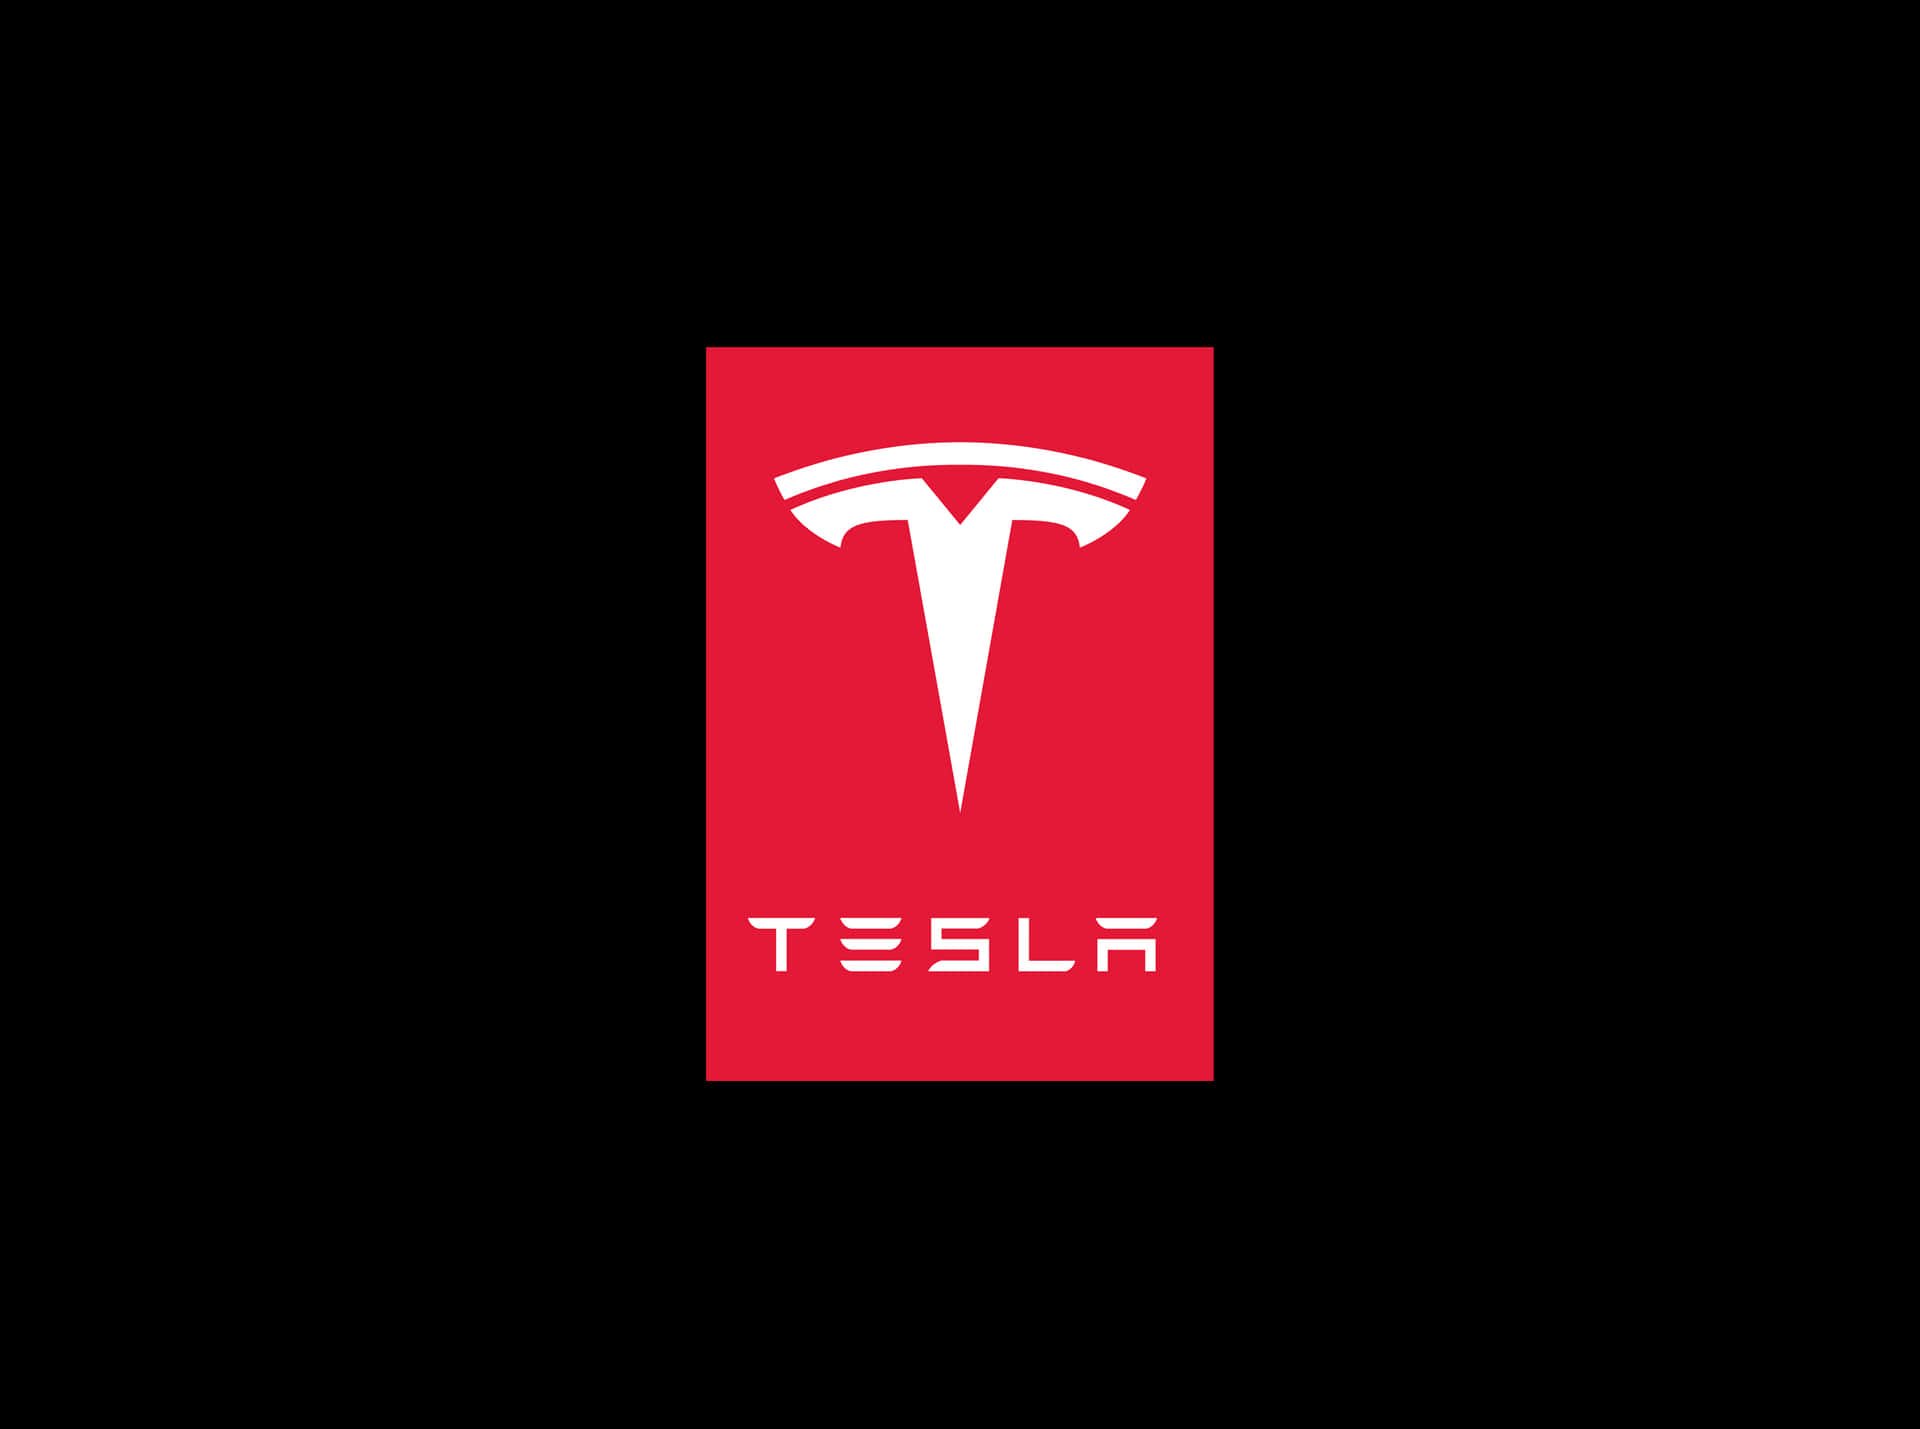 Dasikonische Tesla-logo In 4k-auflösung. Wallpaper